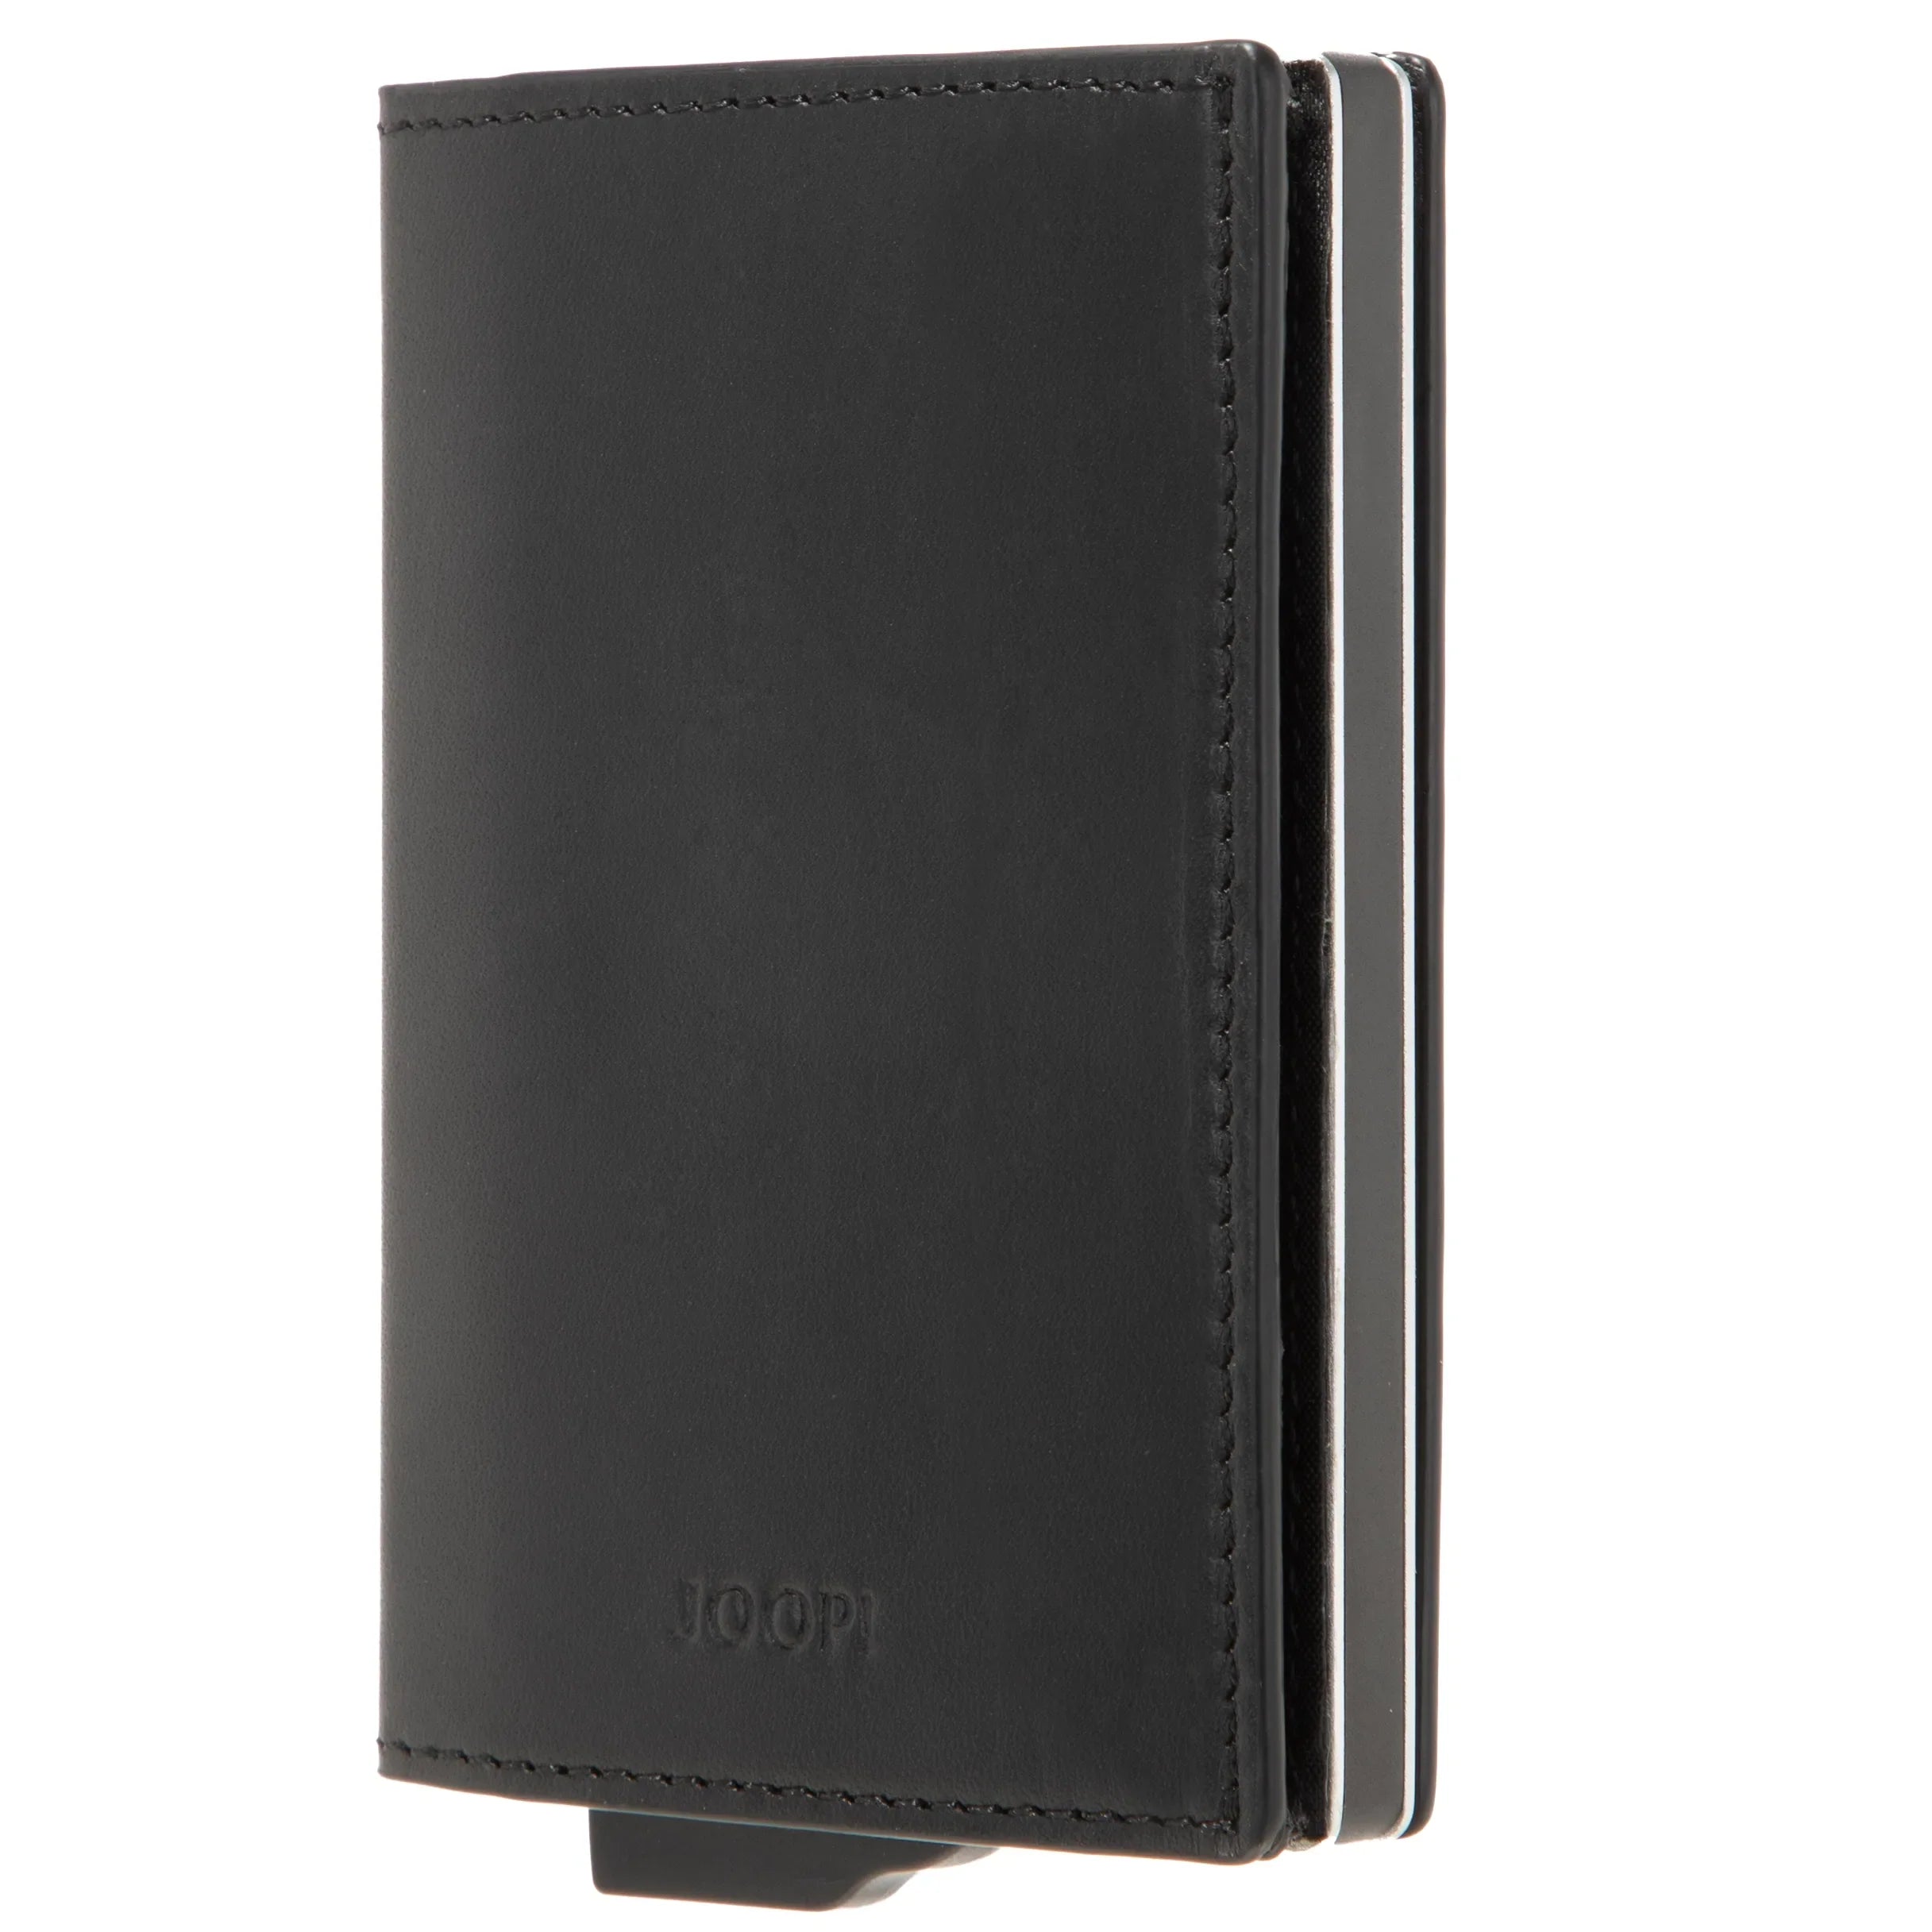 Geldbörse Cardona Black 10 C-One SV8 Joop - E-Cage RFID cm